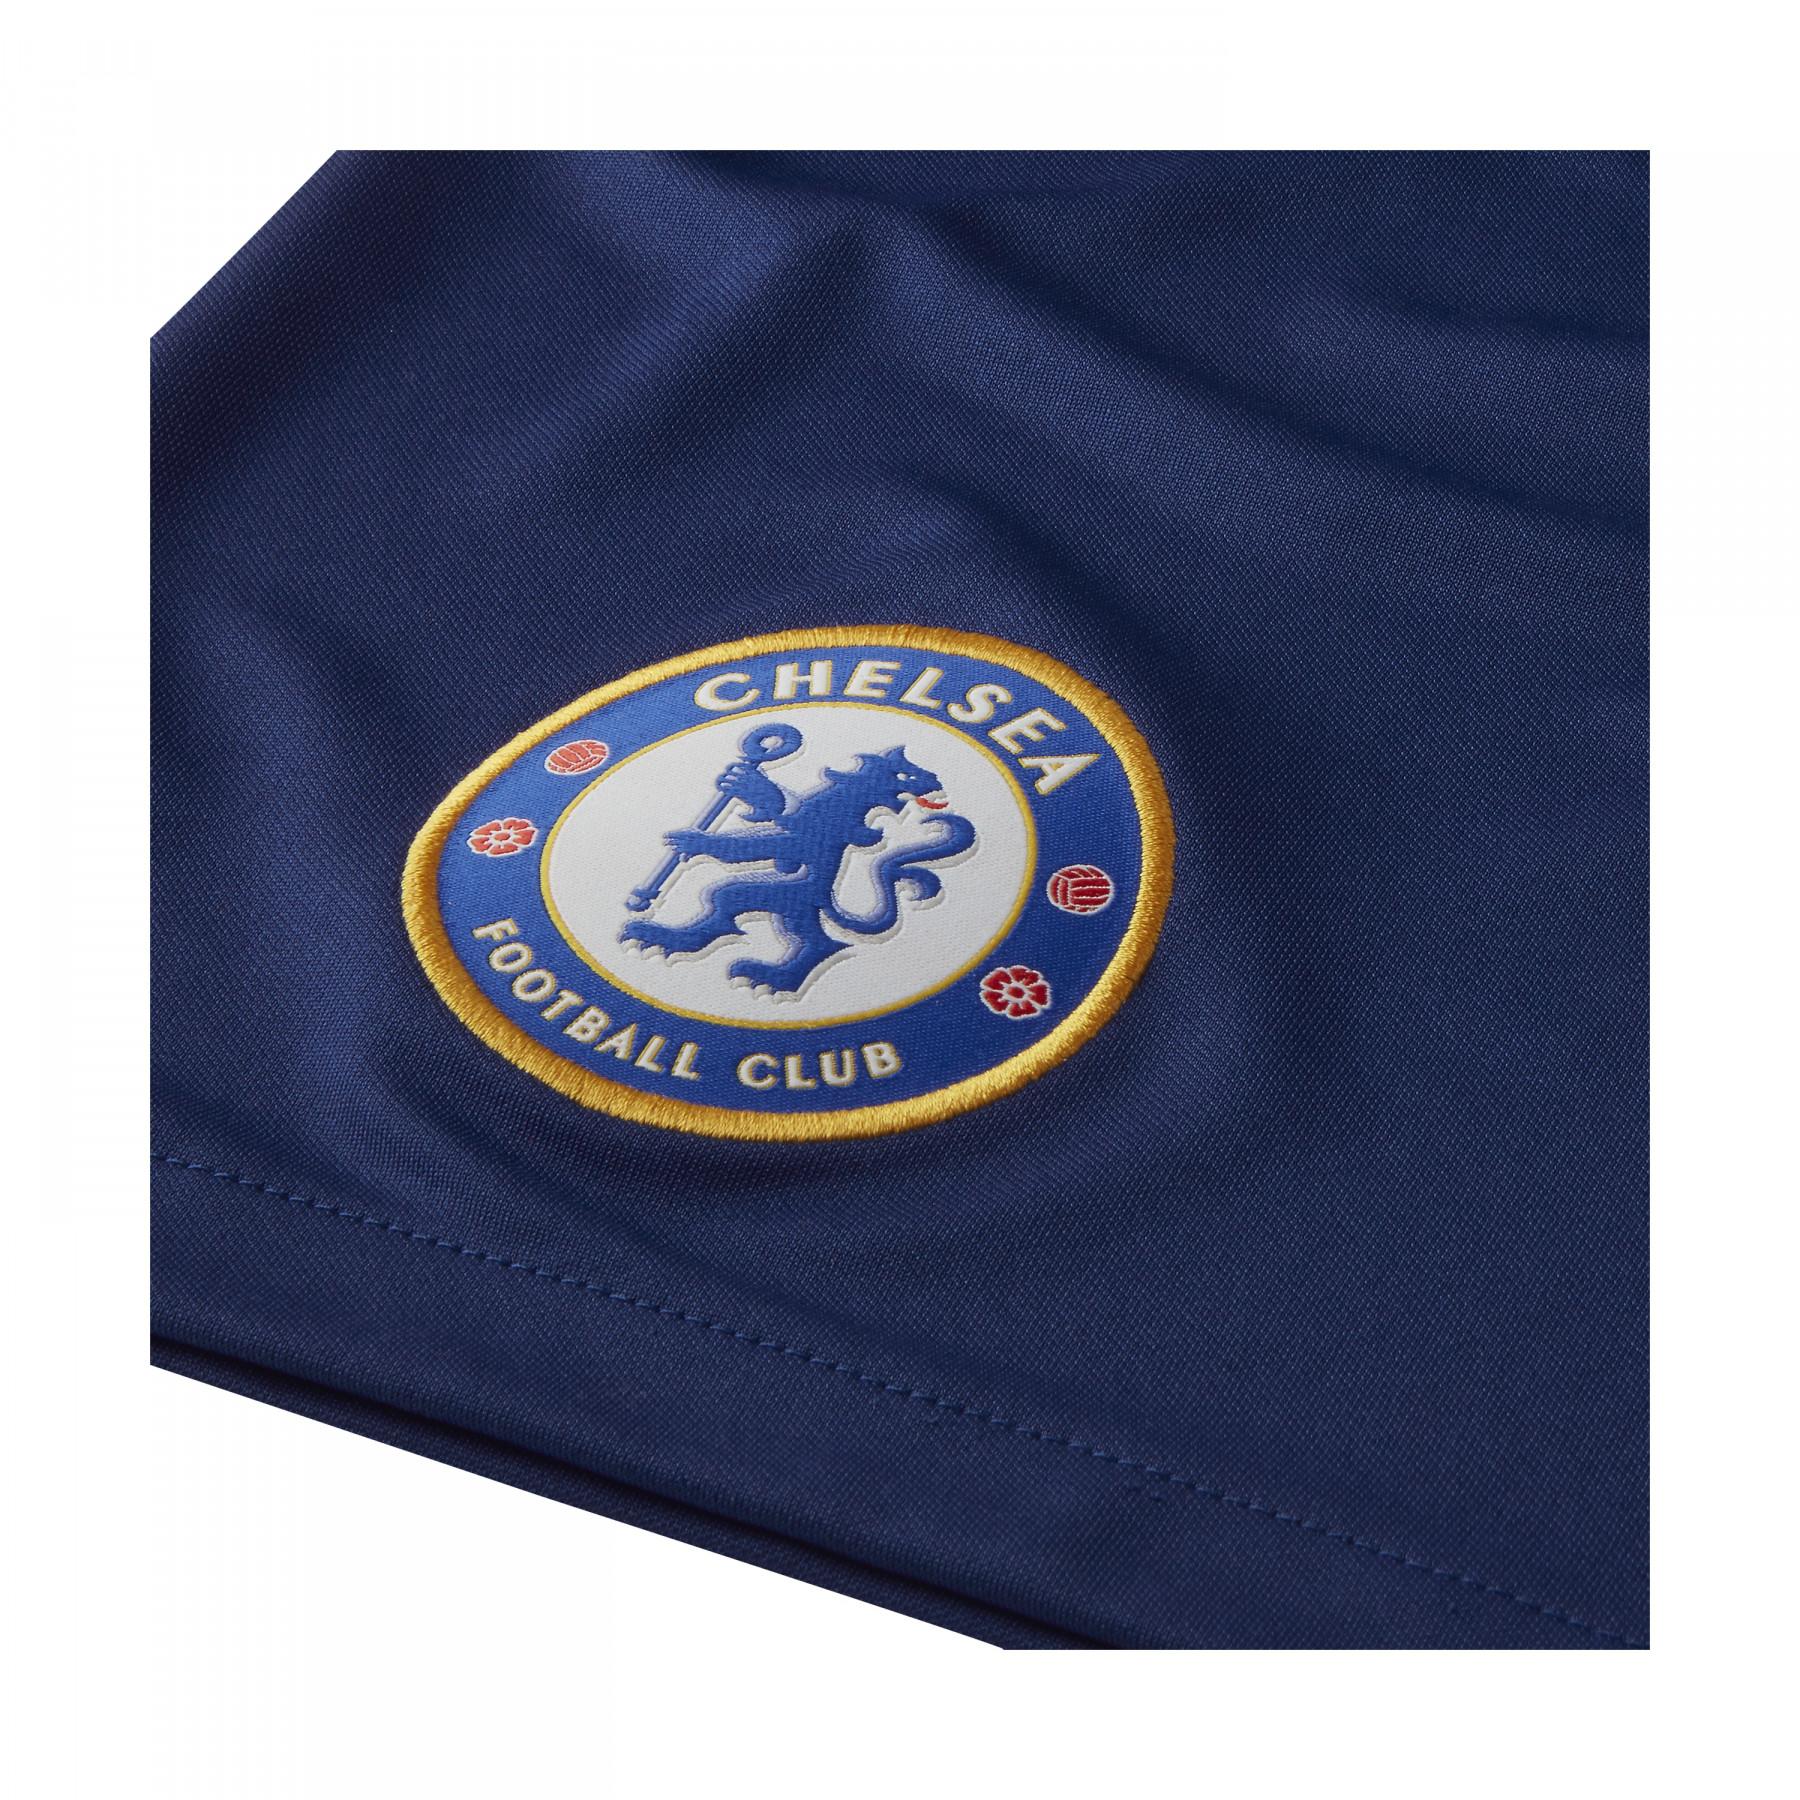 Home shorts Chelsea 2019/20